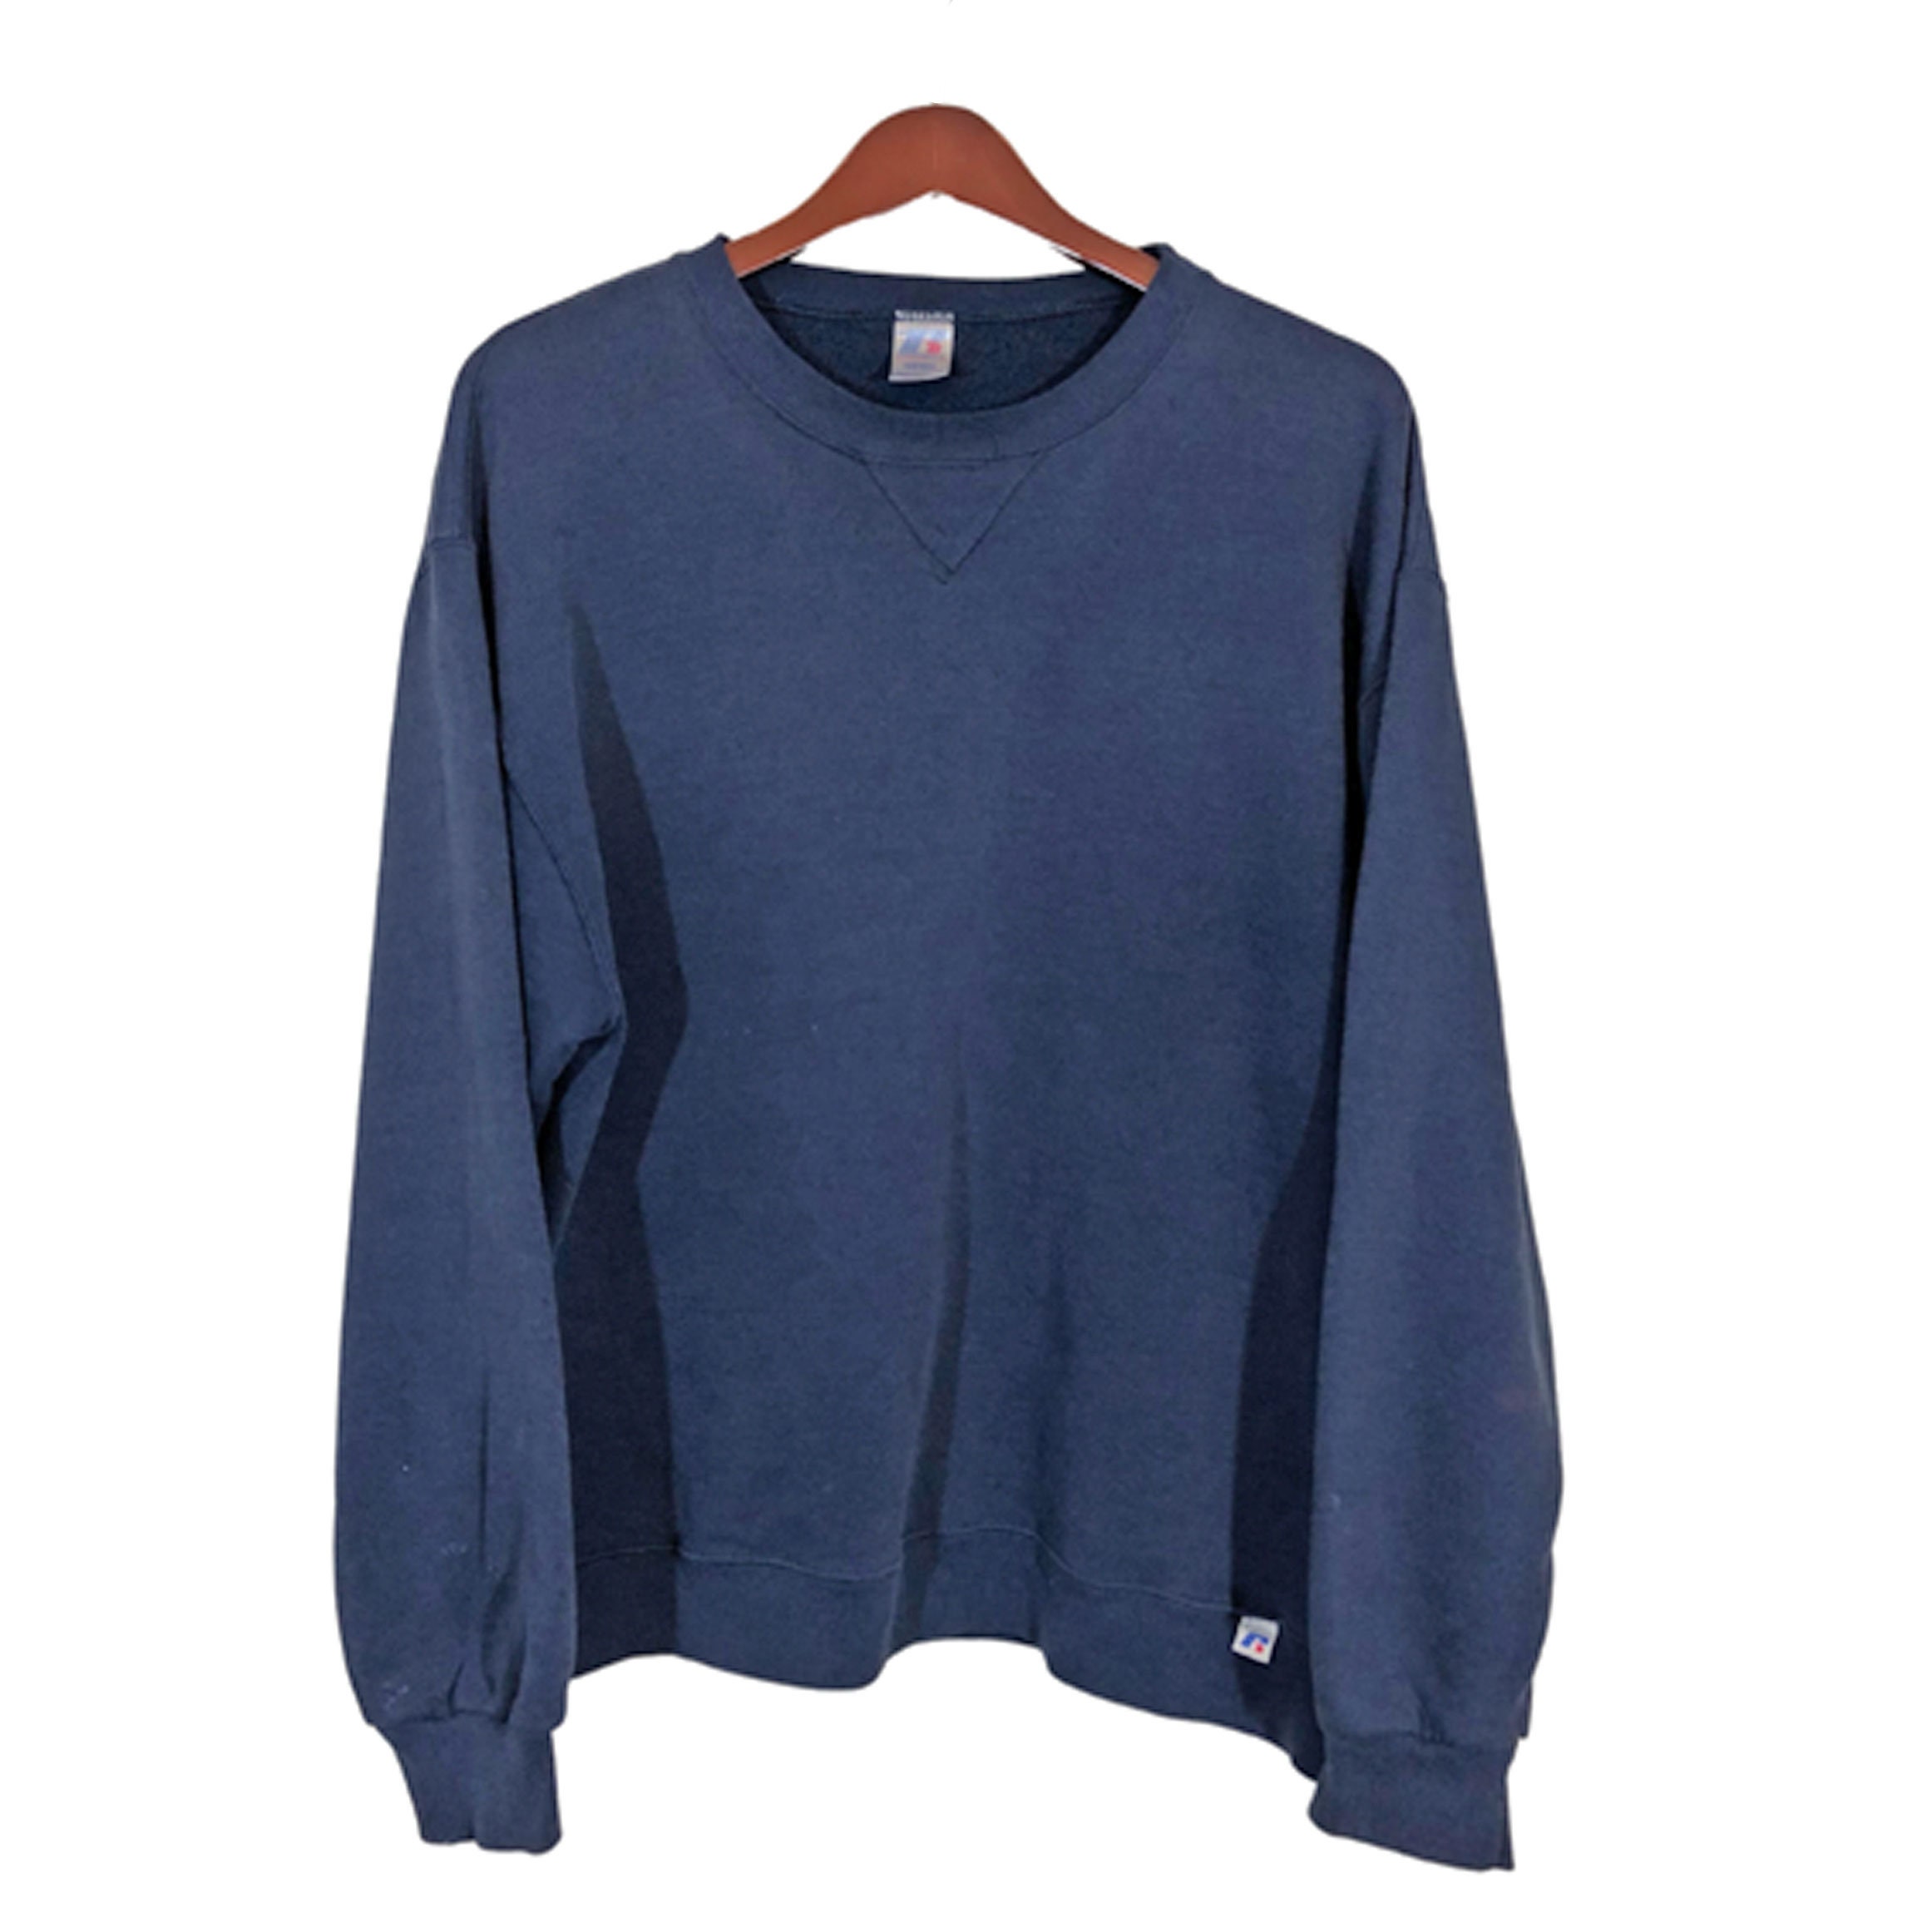 Men's Sweatshirt - Blue - L